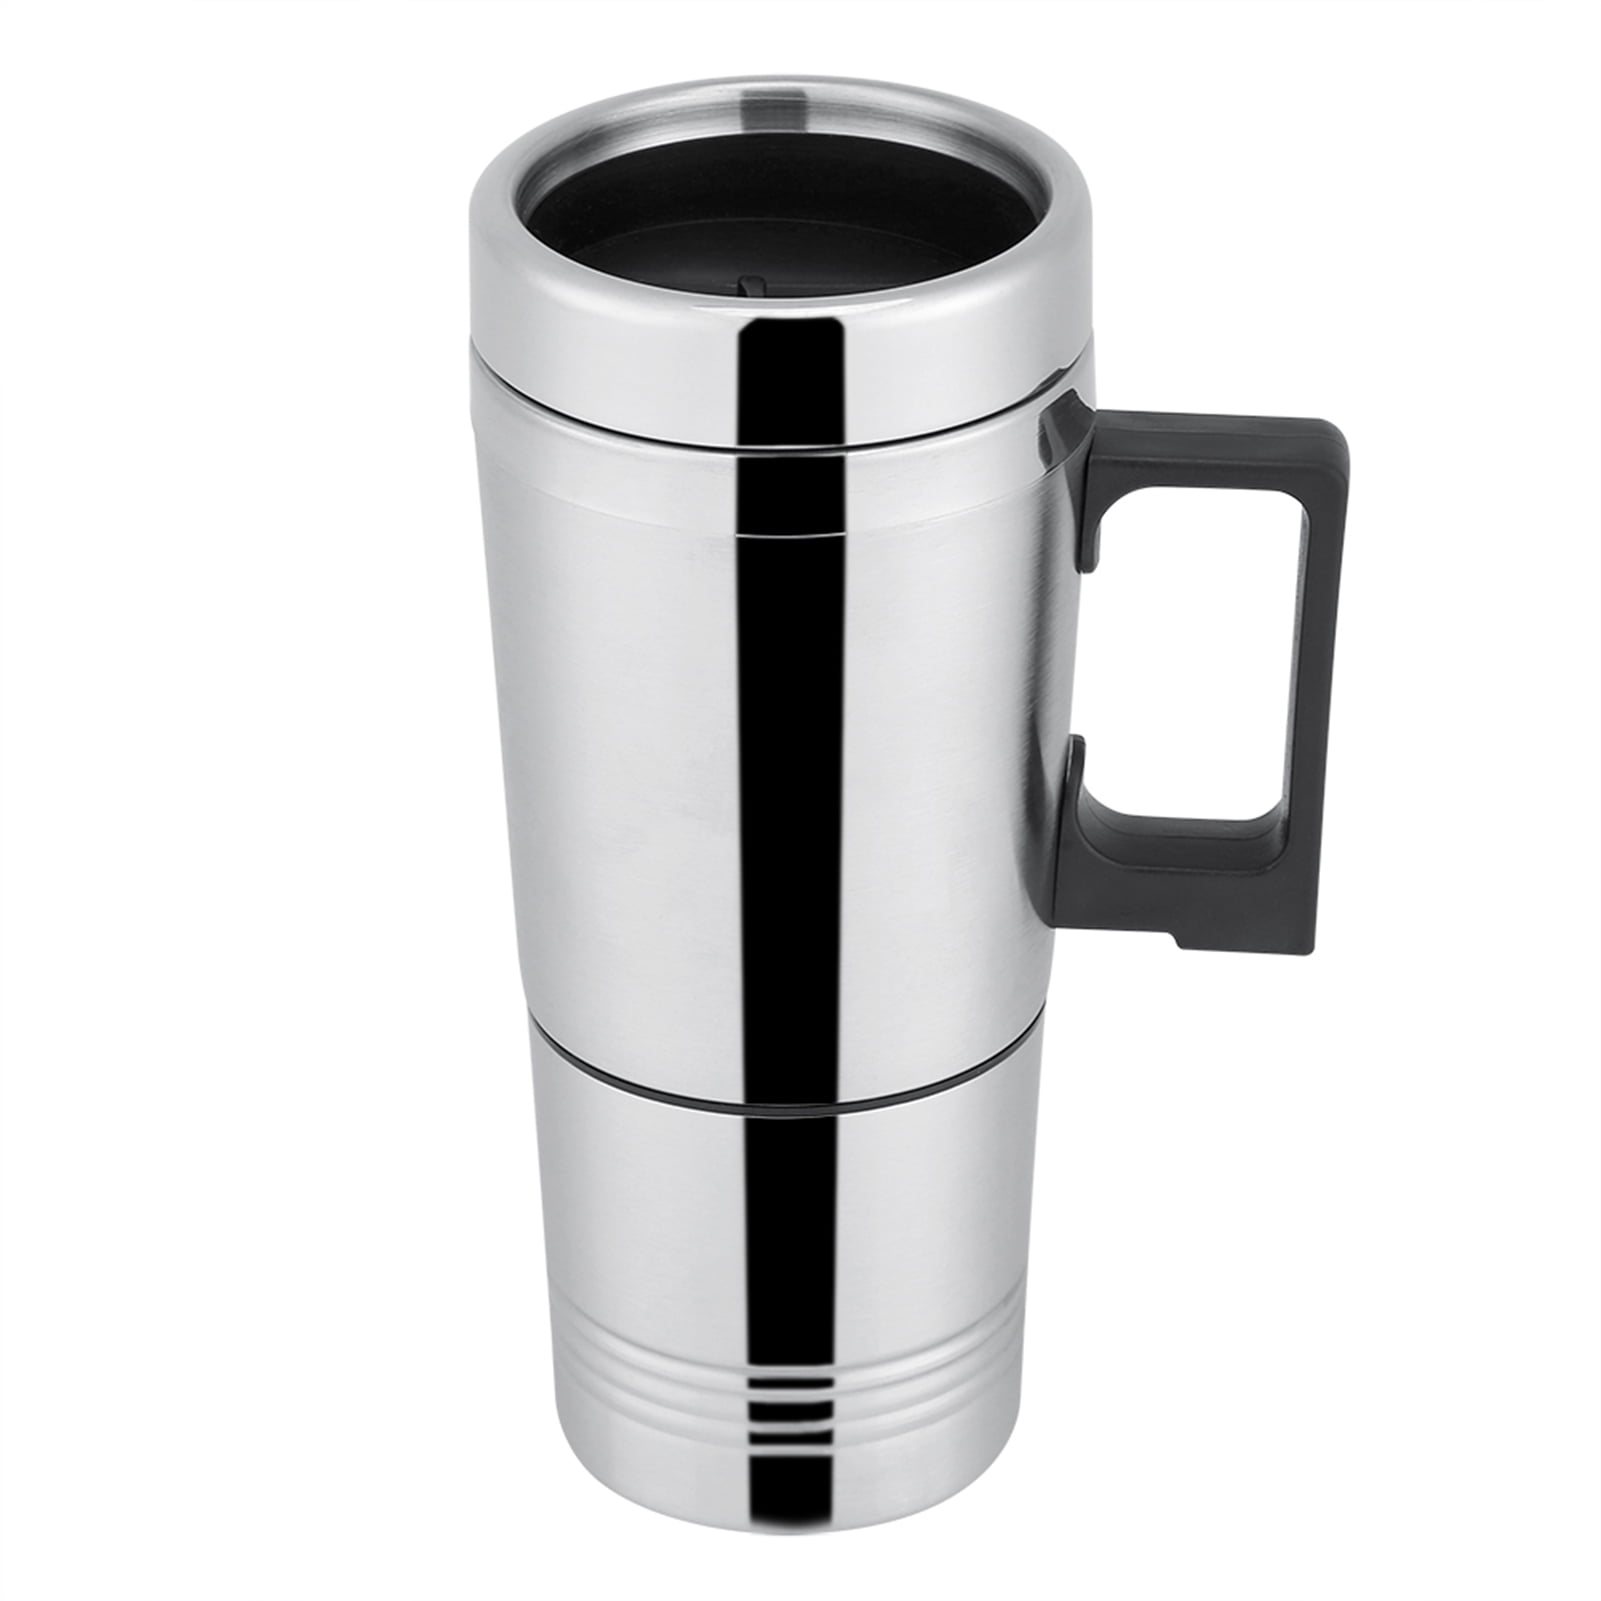 Cup and mug warmer – Consta